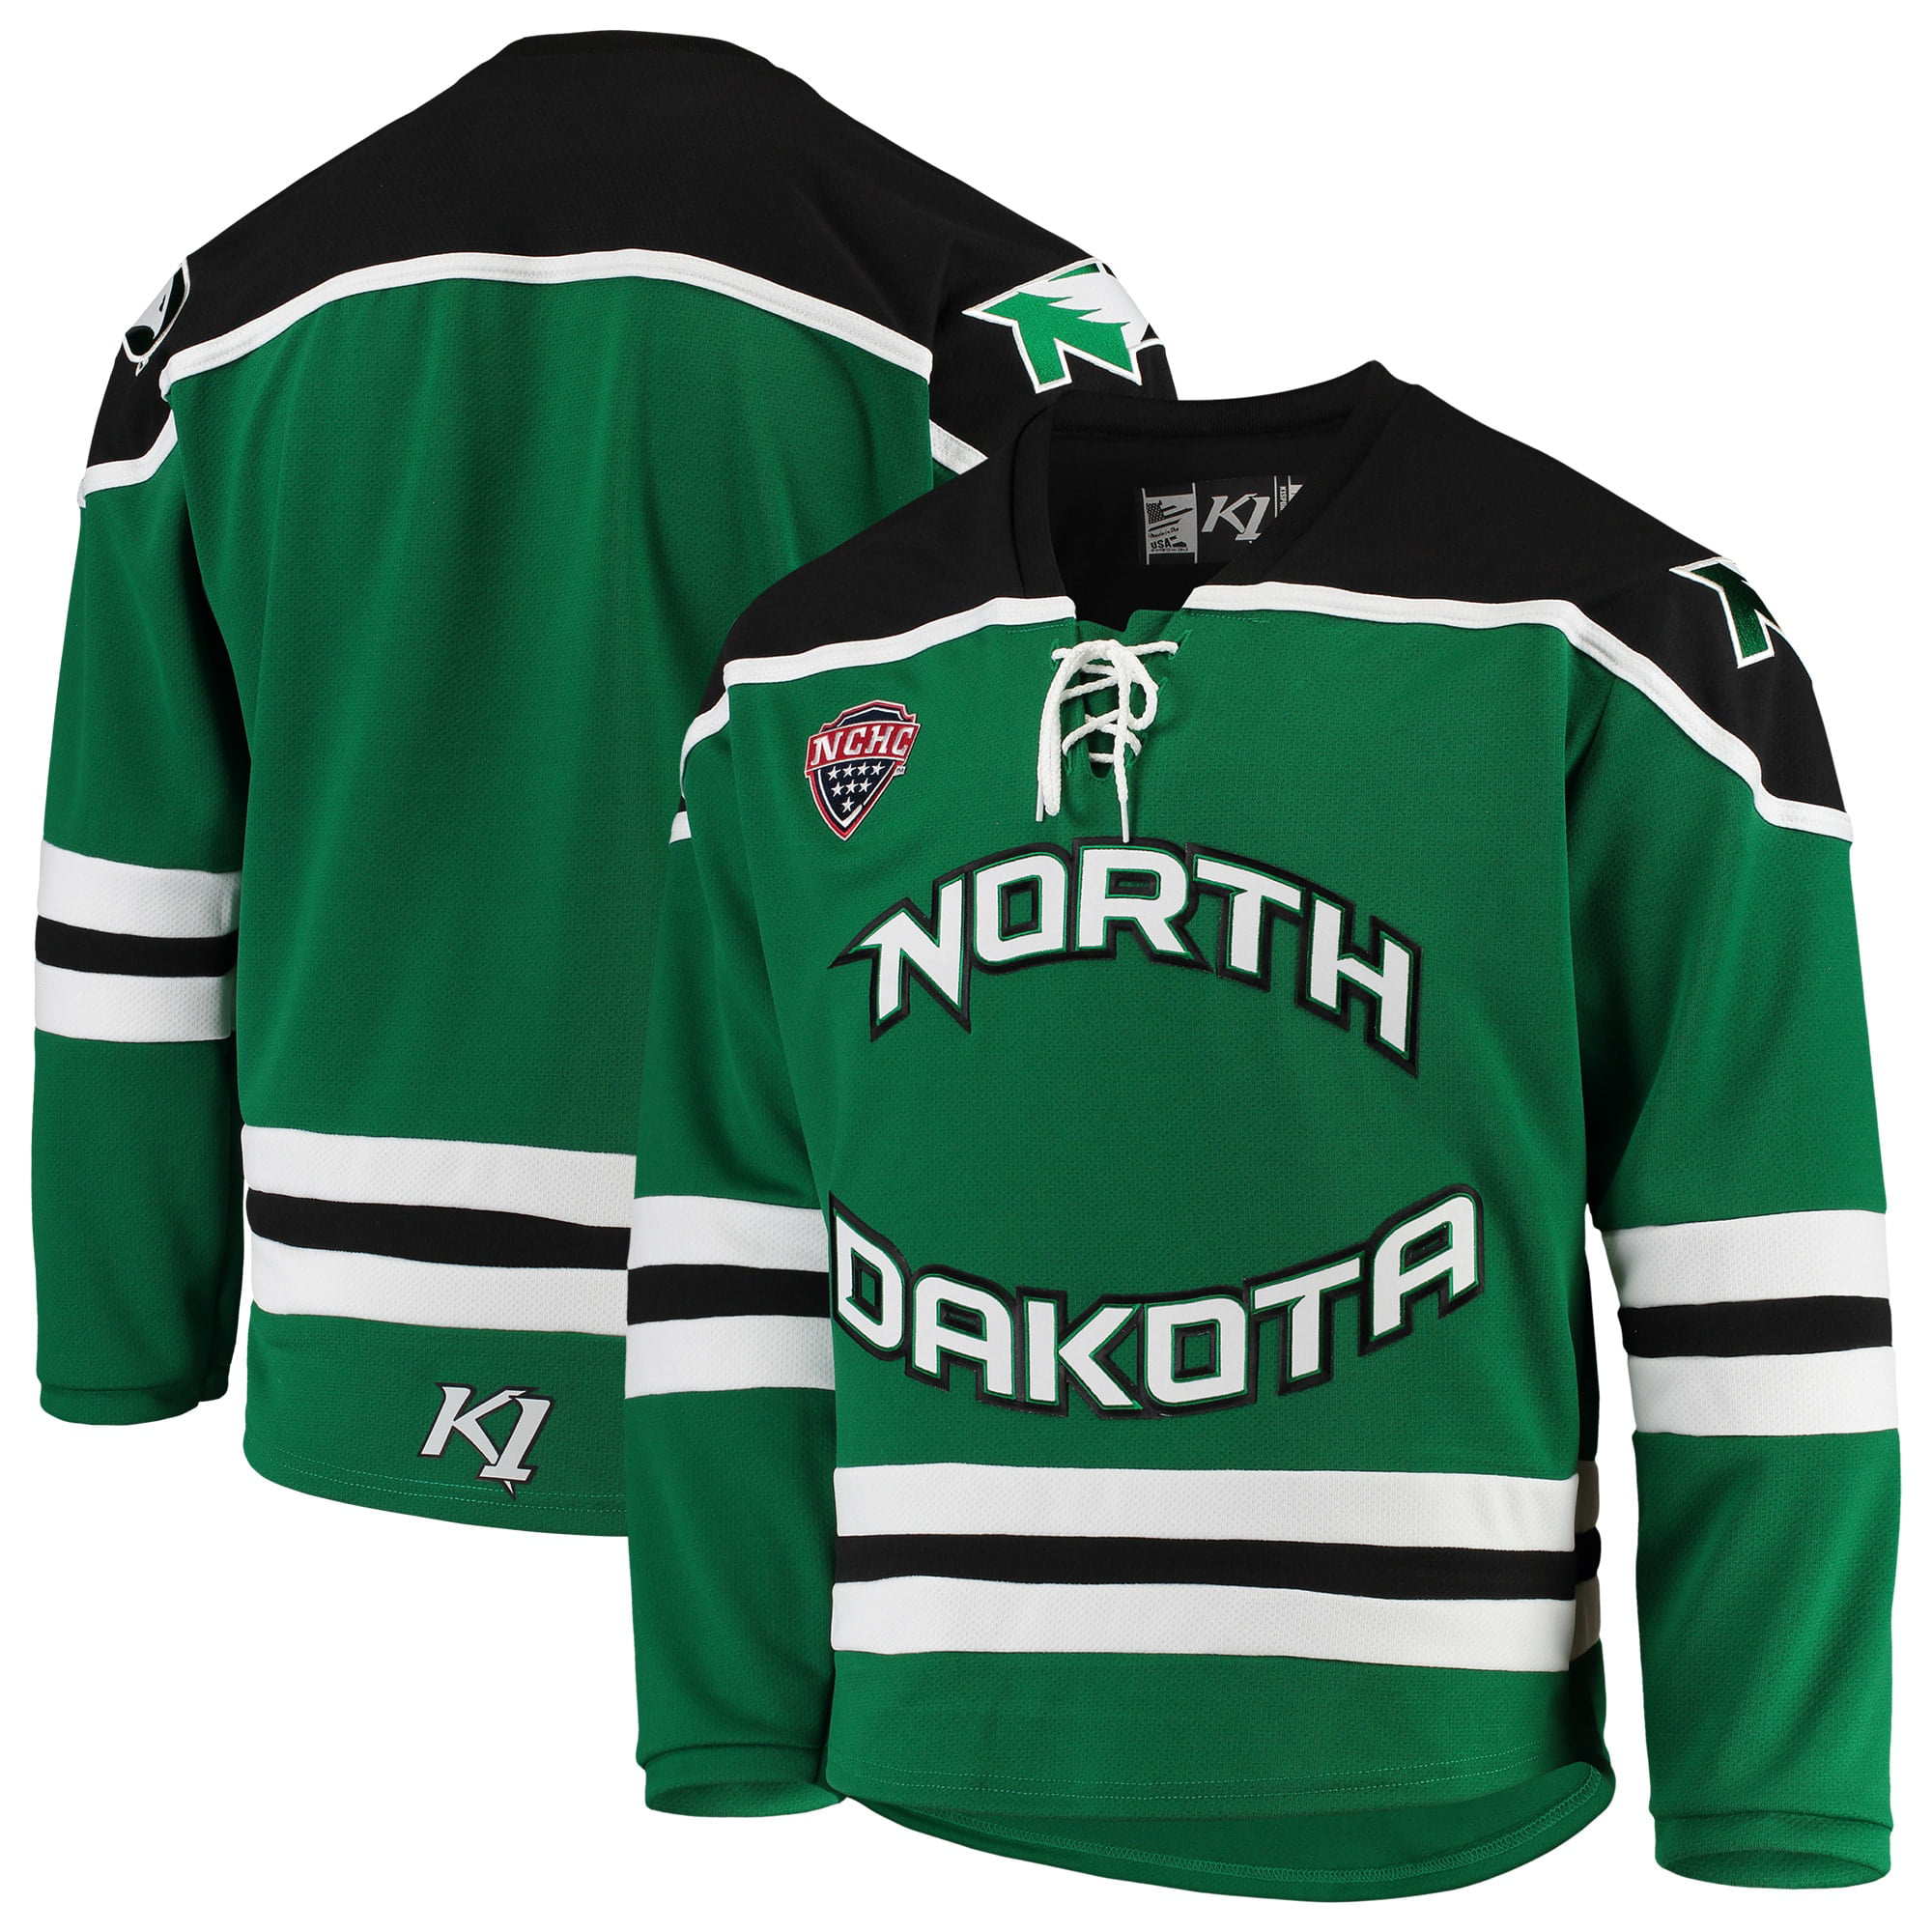 K1 Sportswear - North Dakota Replica []Hockey<img src=